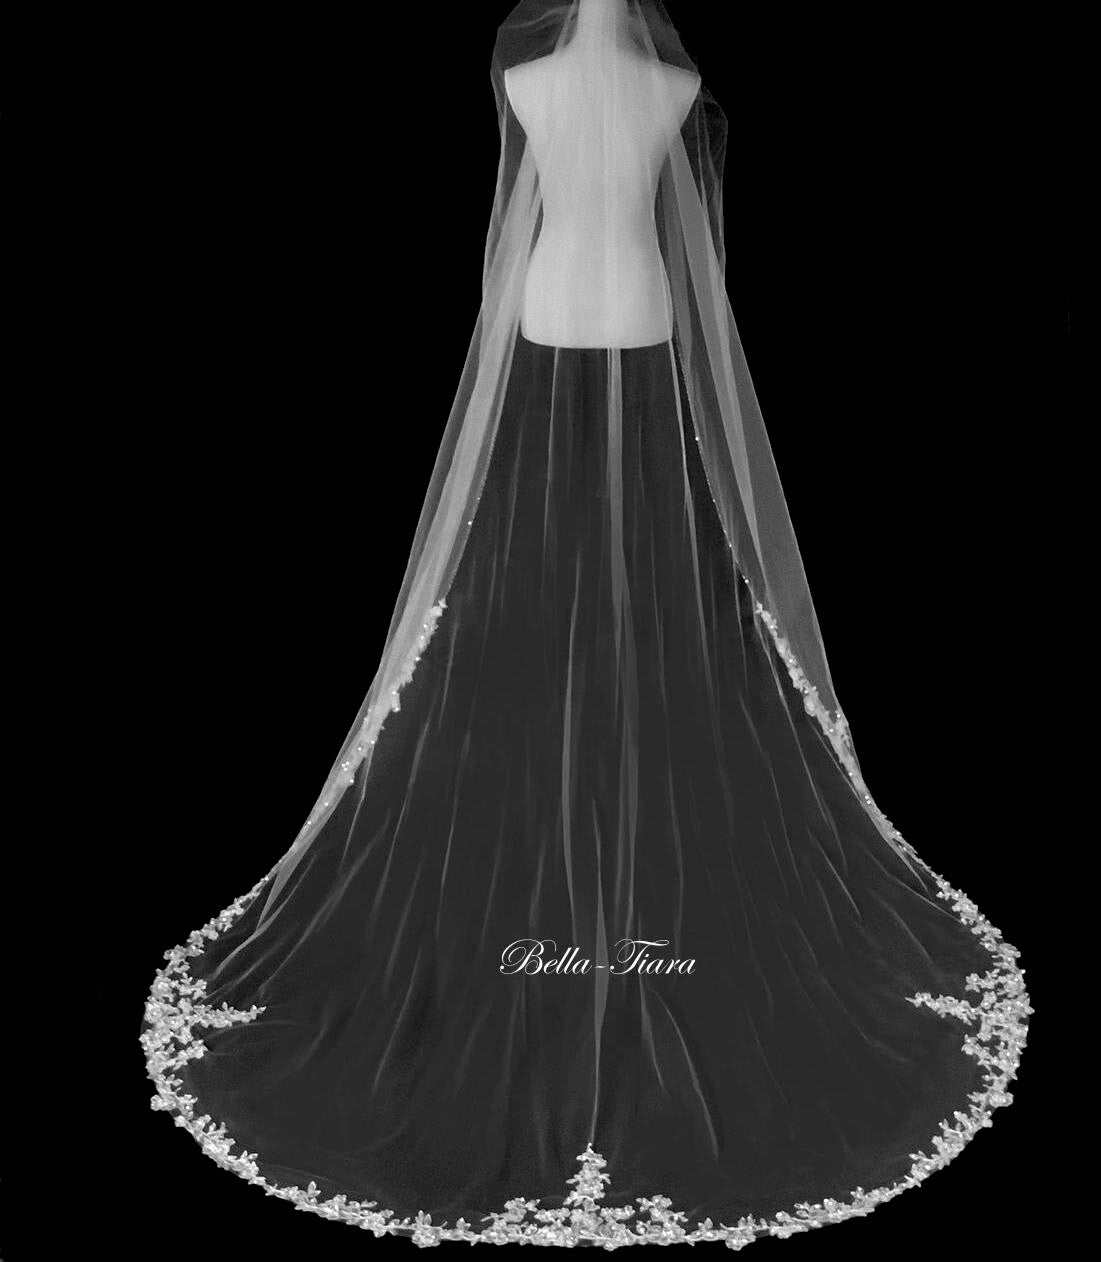 Ambrosia - Regal Cathedral Flower lace trim wedding veil